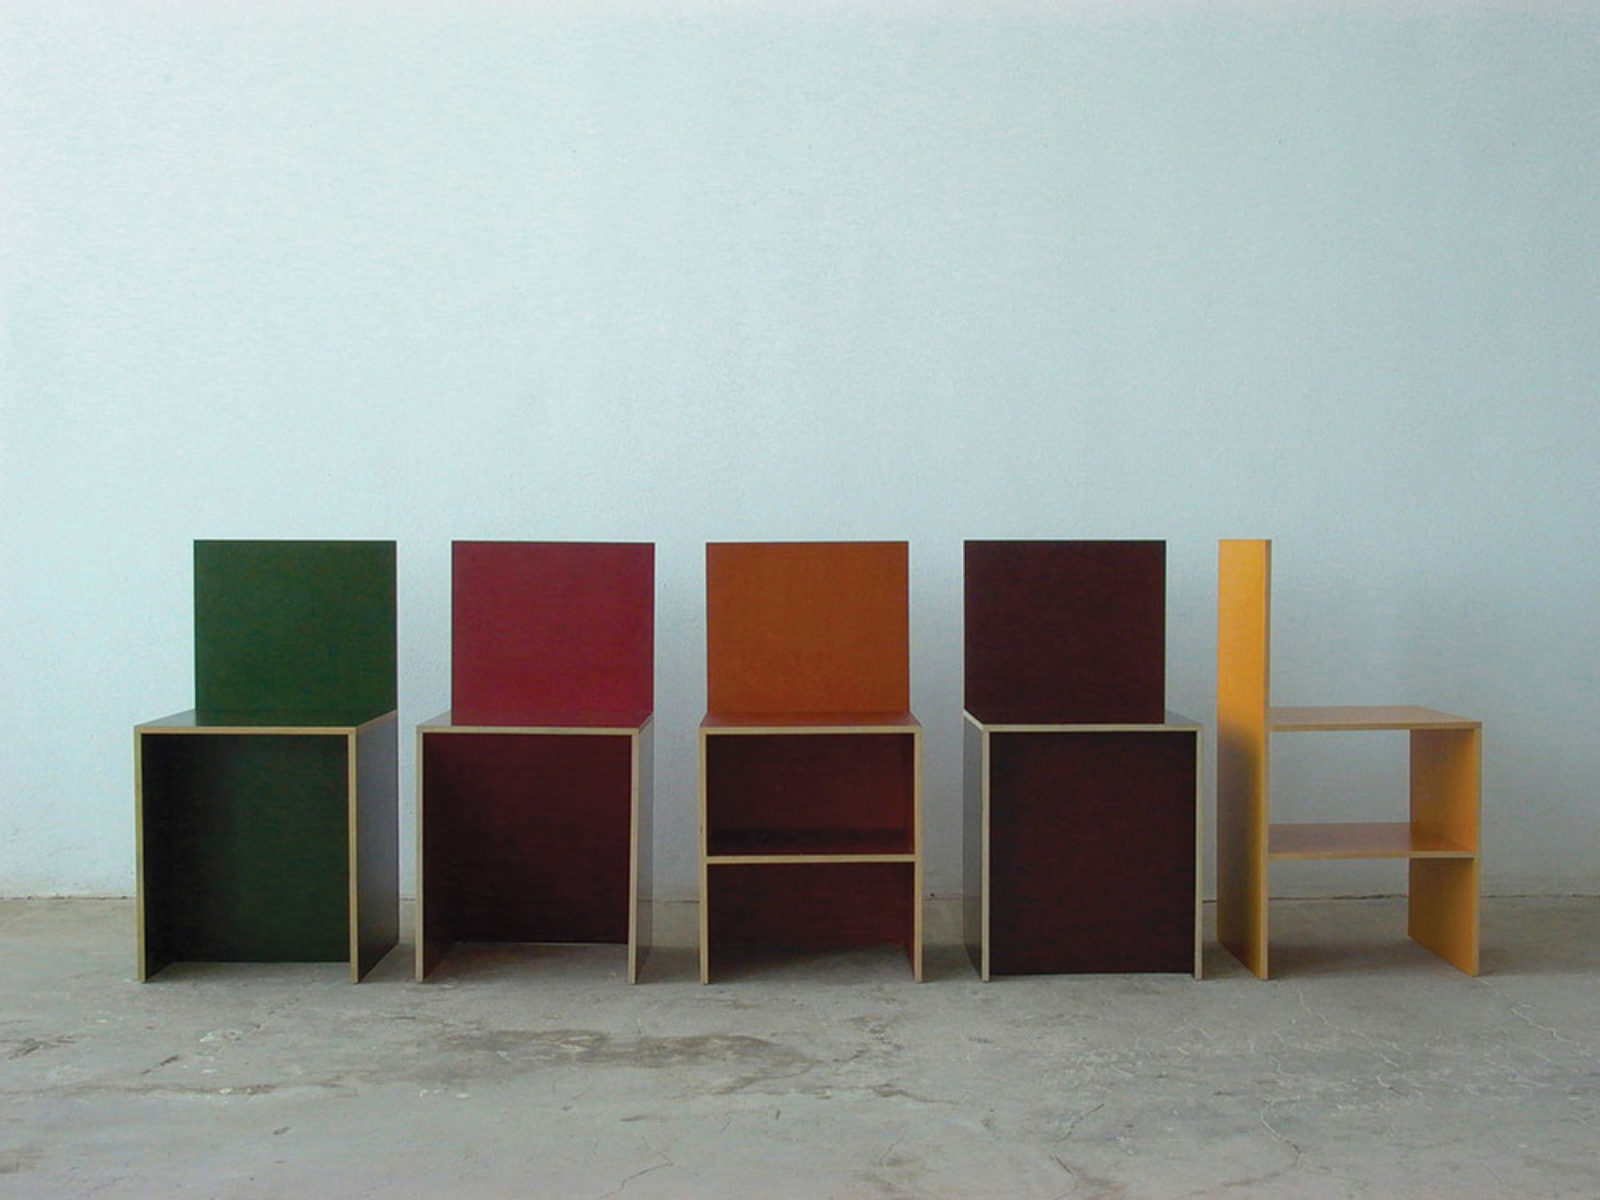 Image: Donald Judd, Chairs, 1984–85
